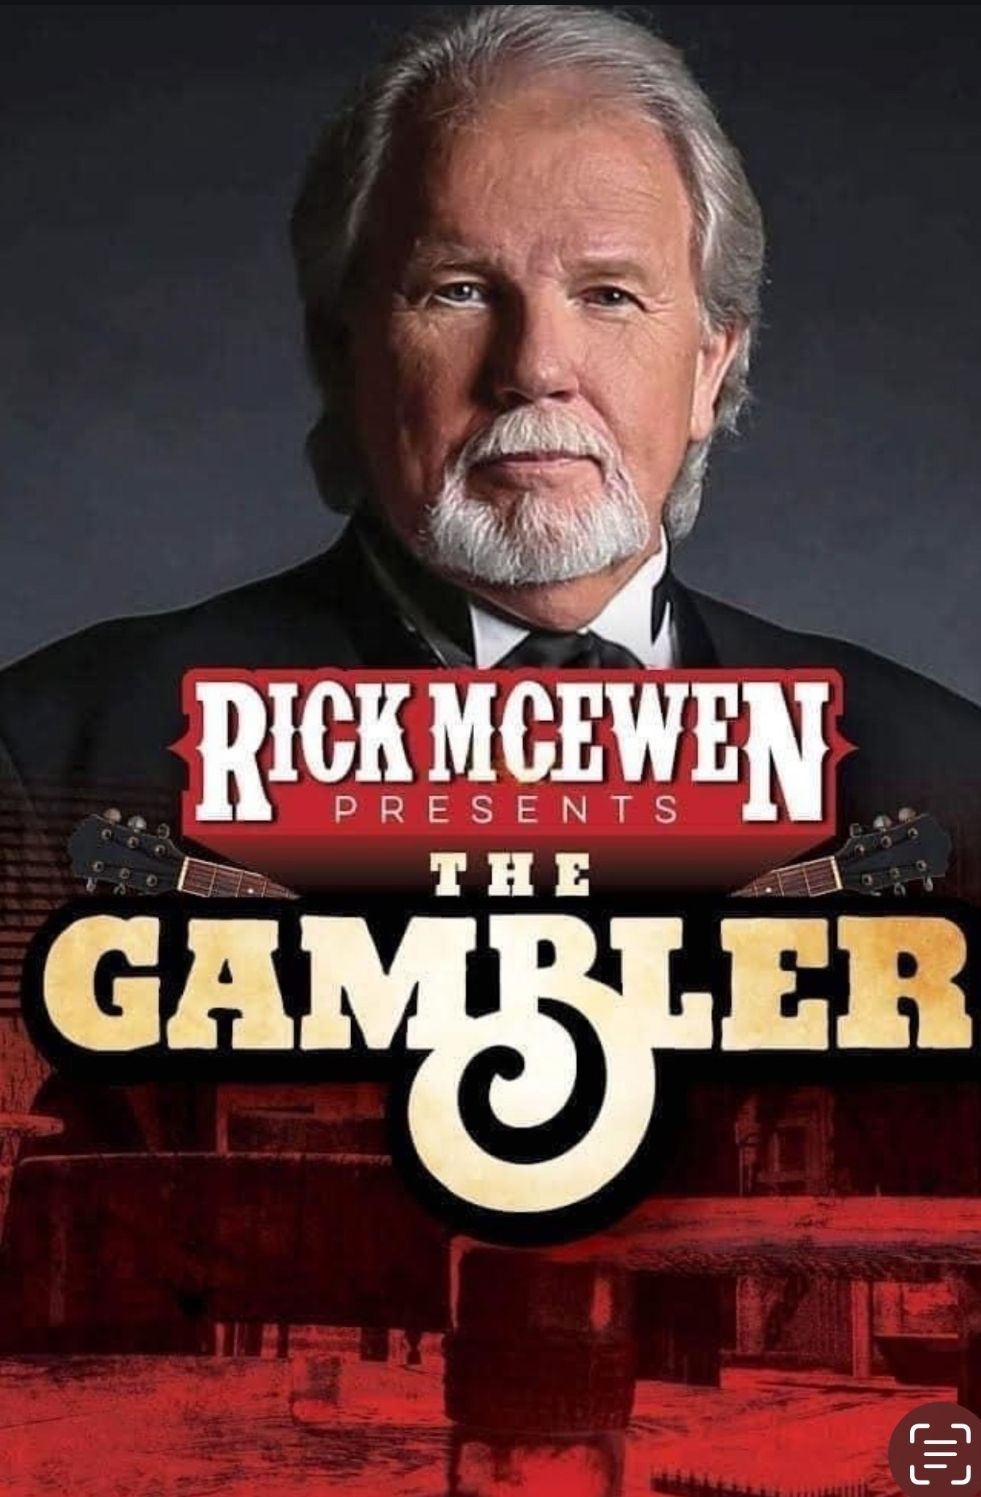 Rick McEwen Presents The Gambler